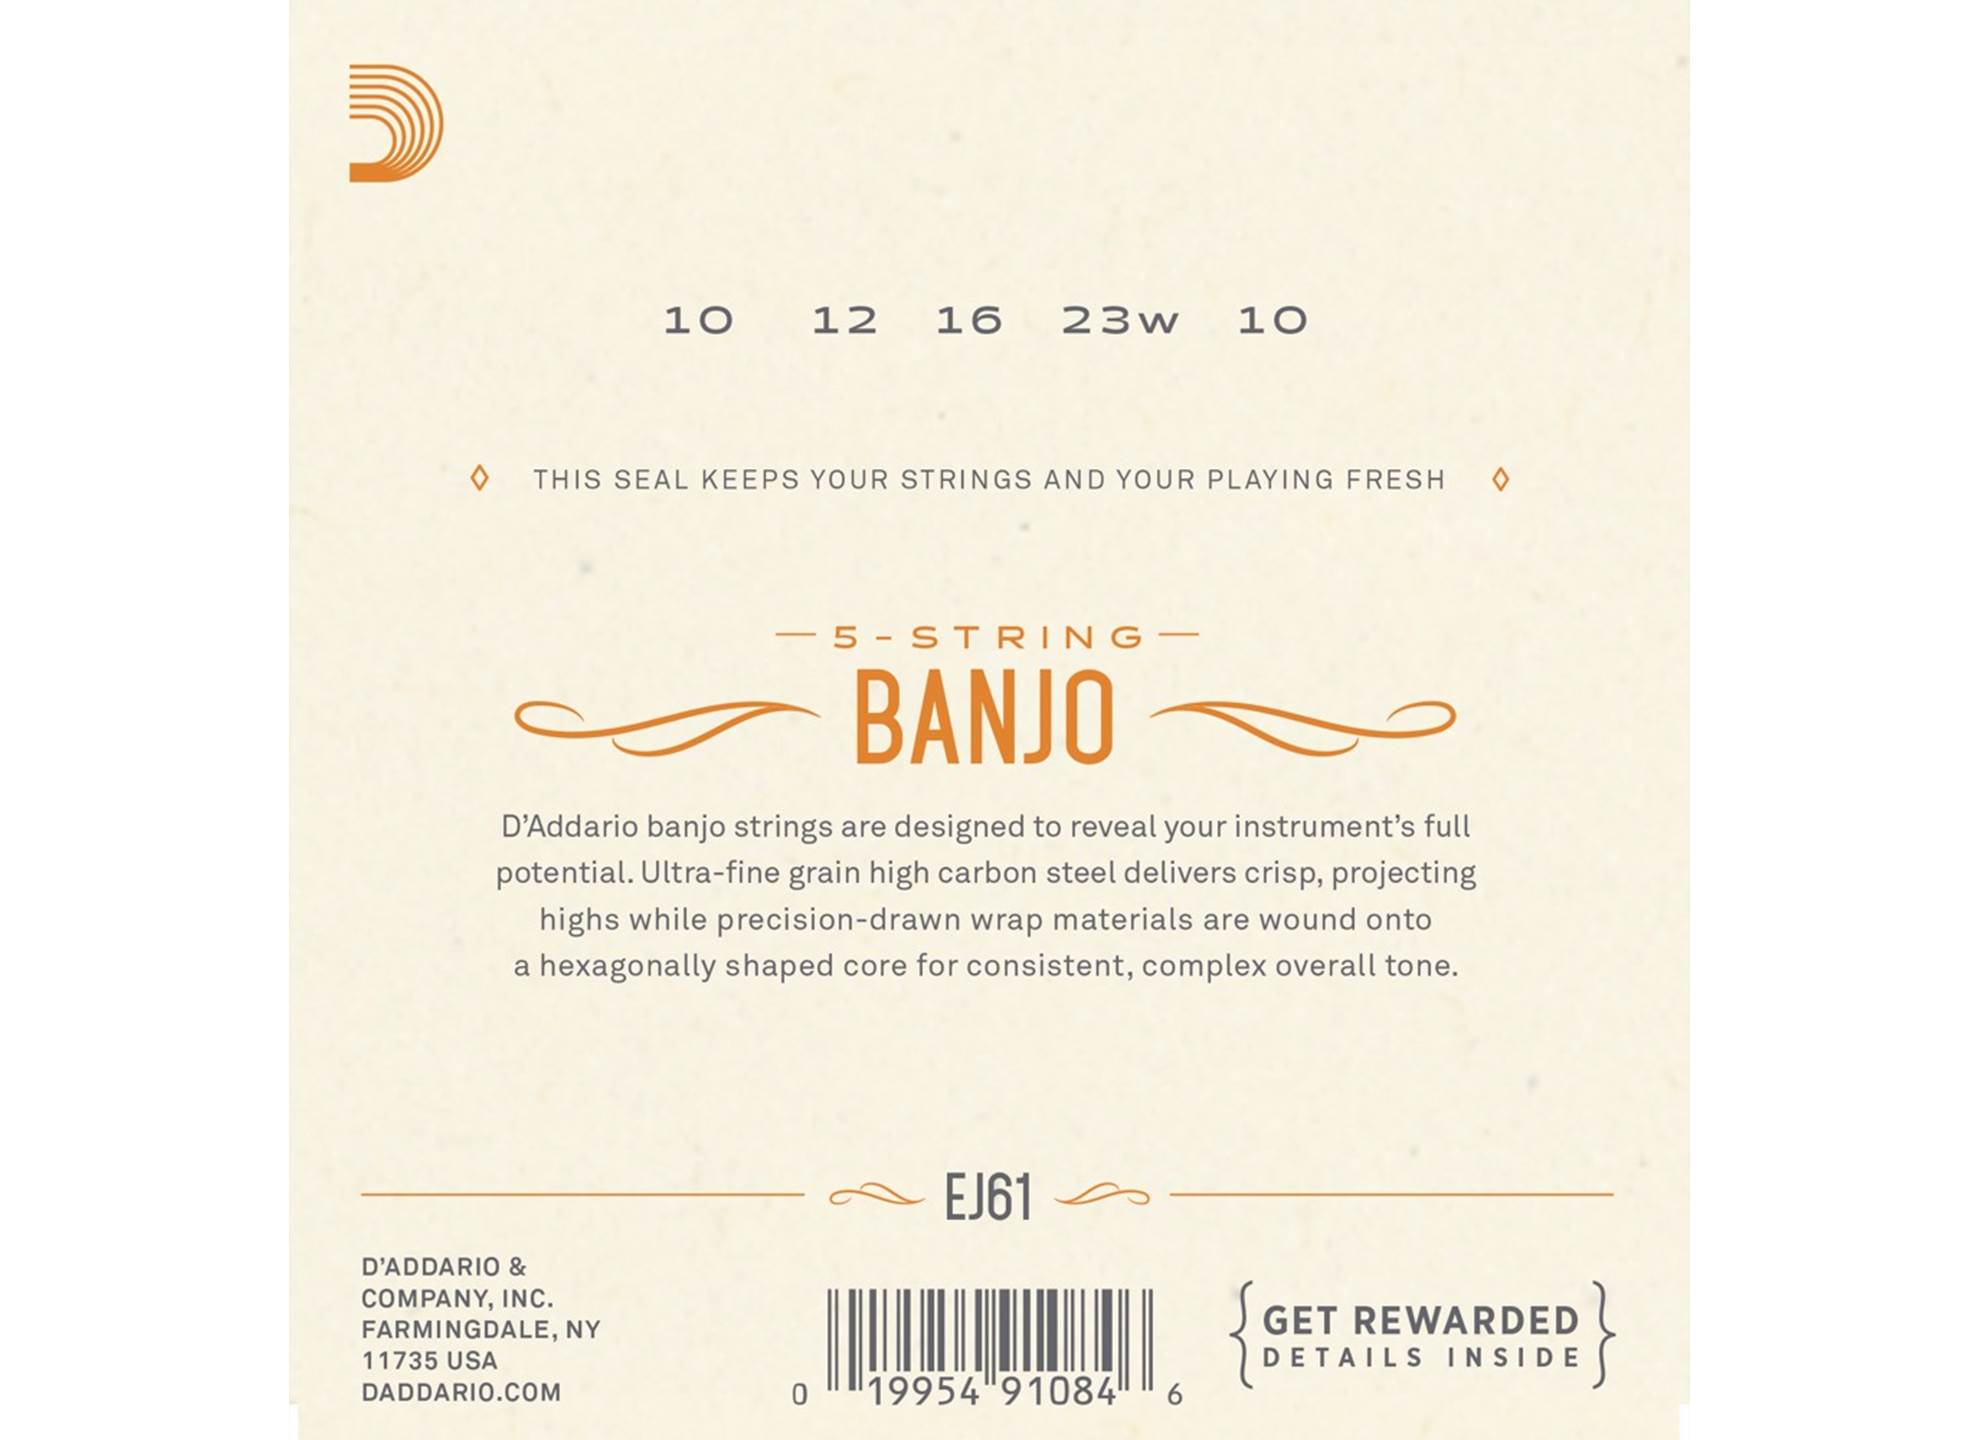 EJ61 5-String Banjo Nickel-Plated Steel 10-10